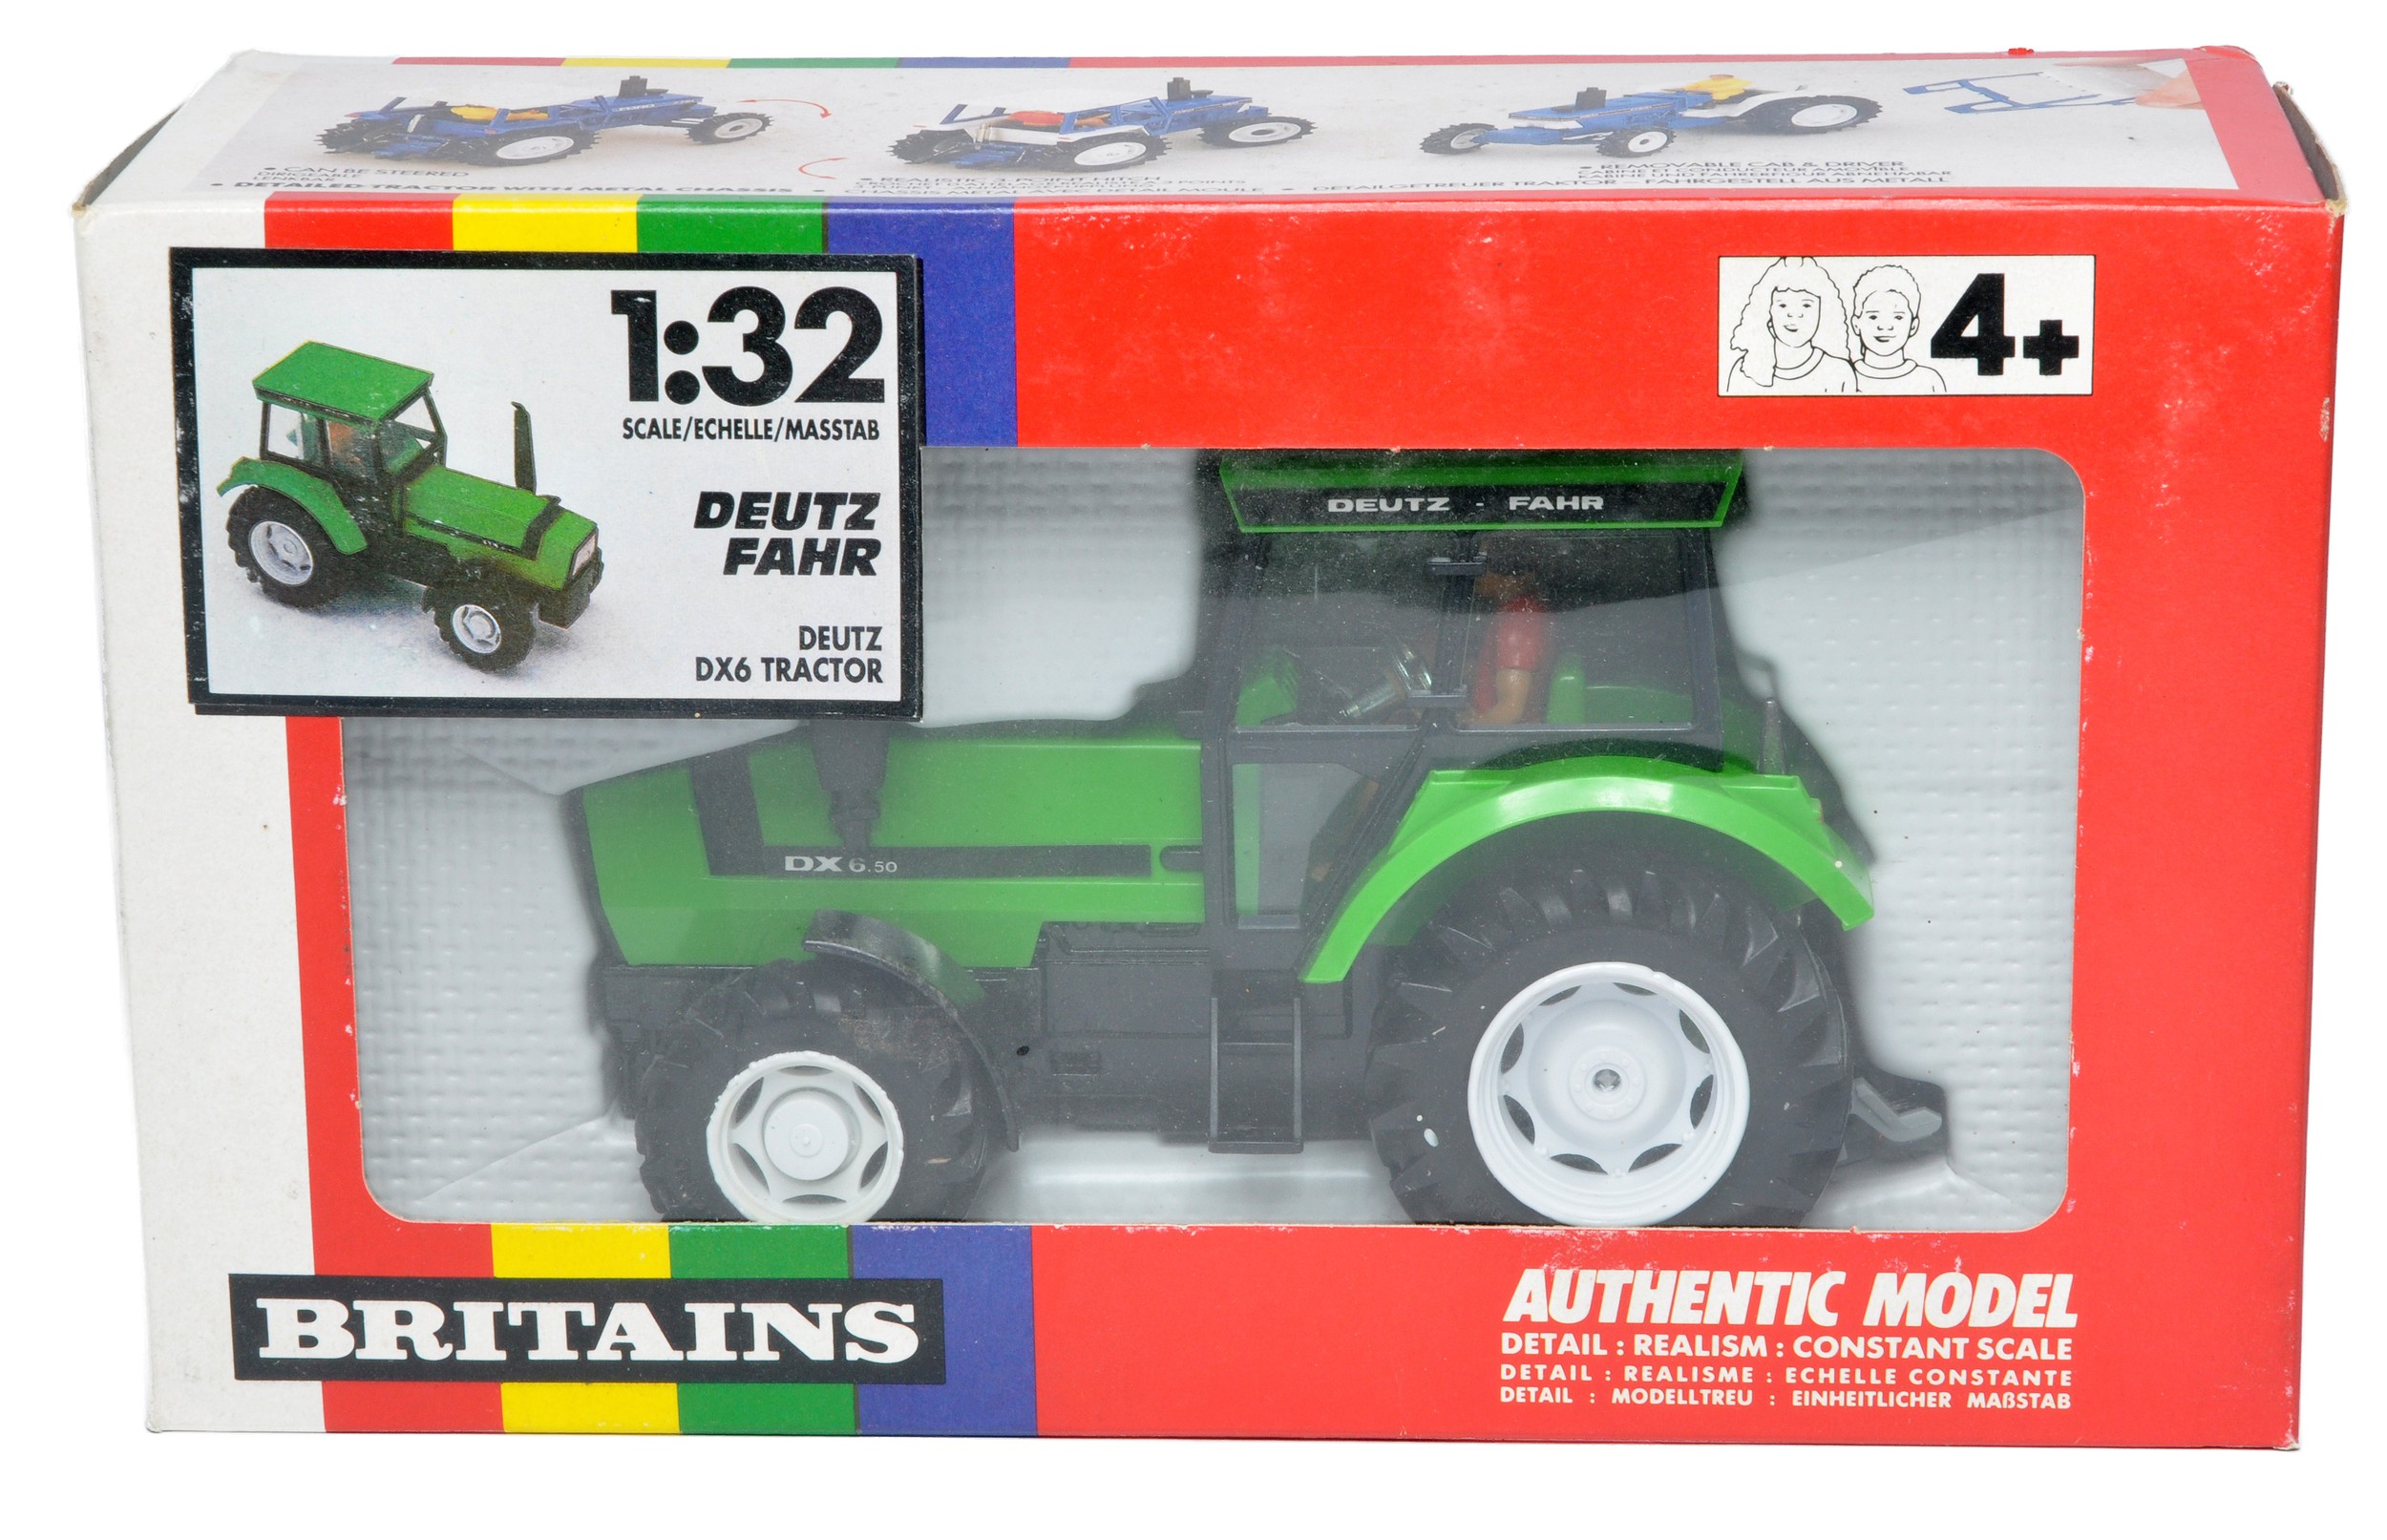 Britains Farm 1/32 diecast model issue comprising No. 9524 Deutz Fahr DX6 Tractor. Very good to